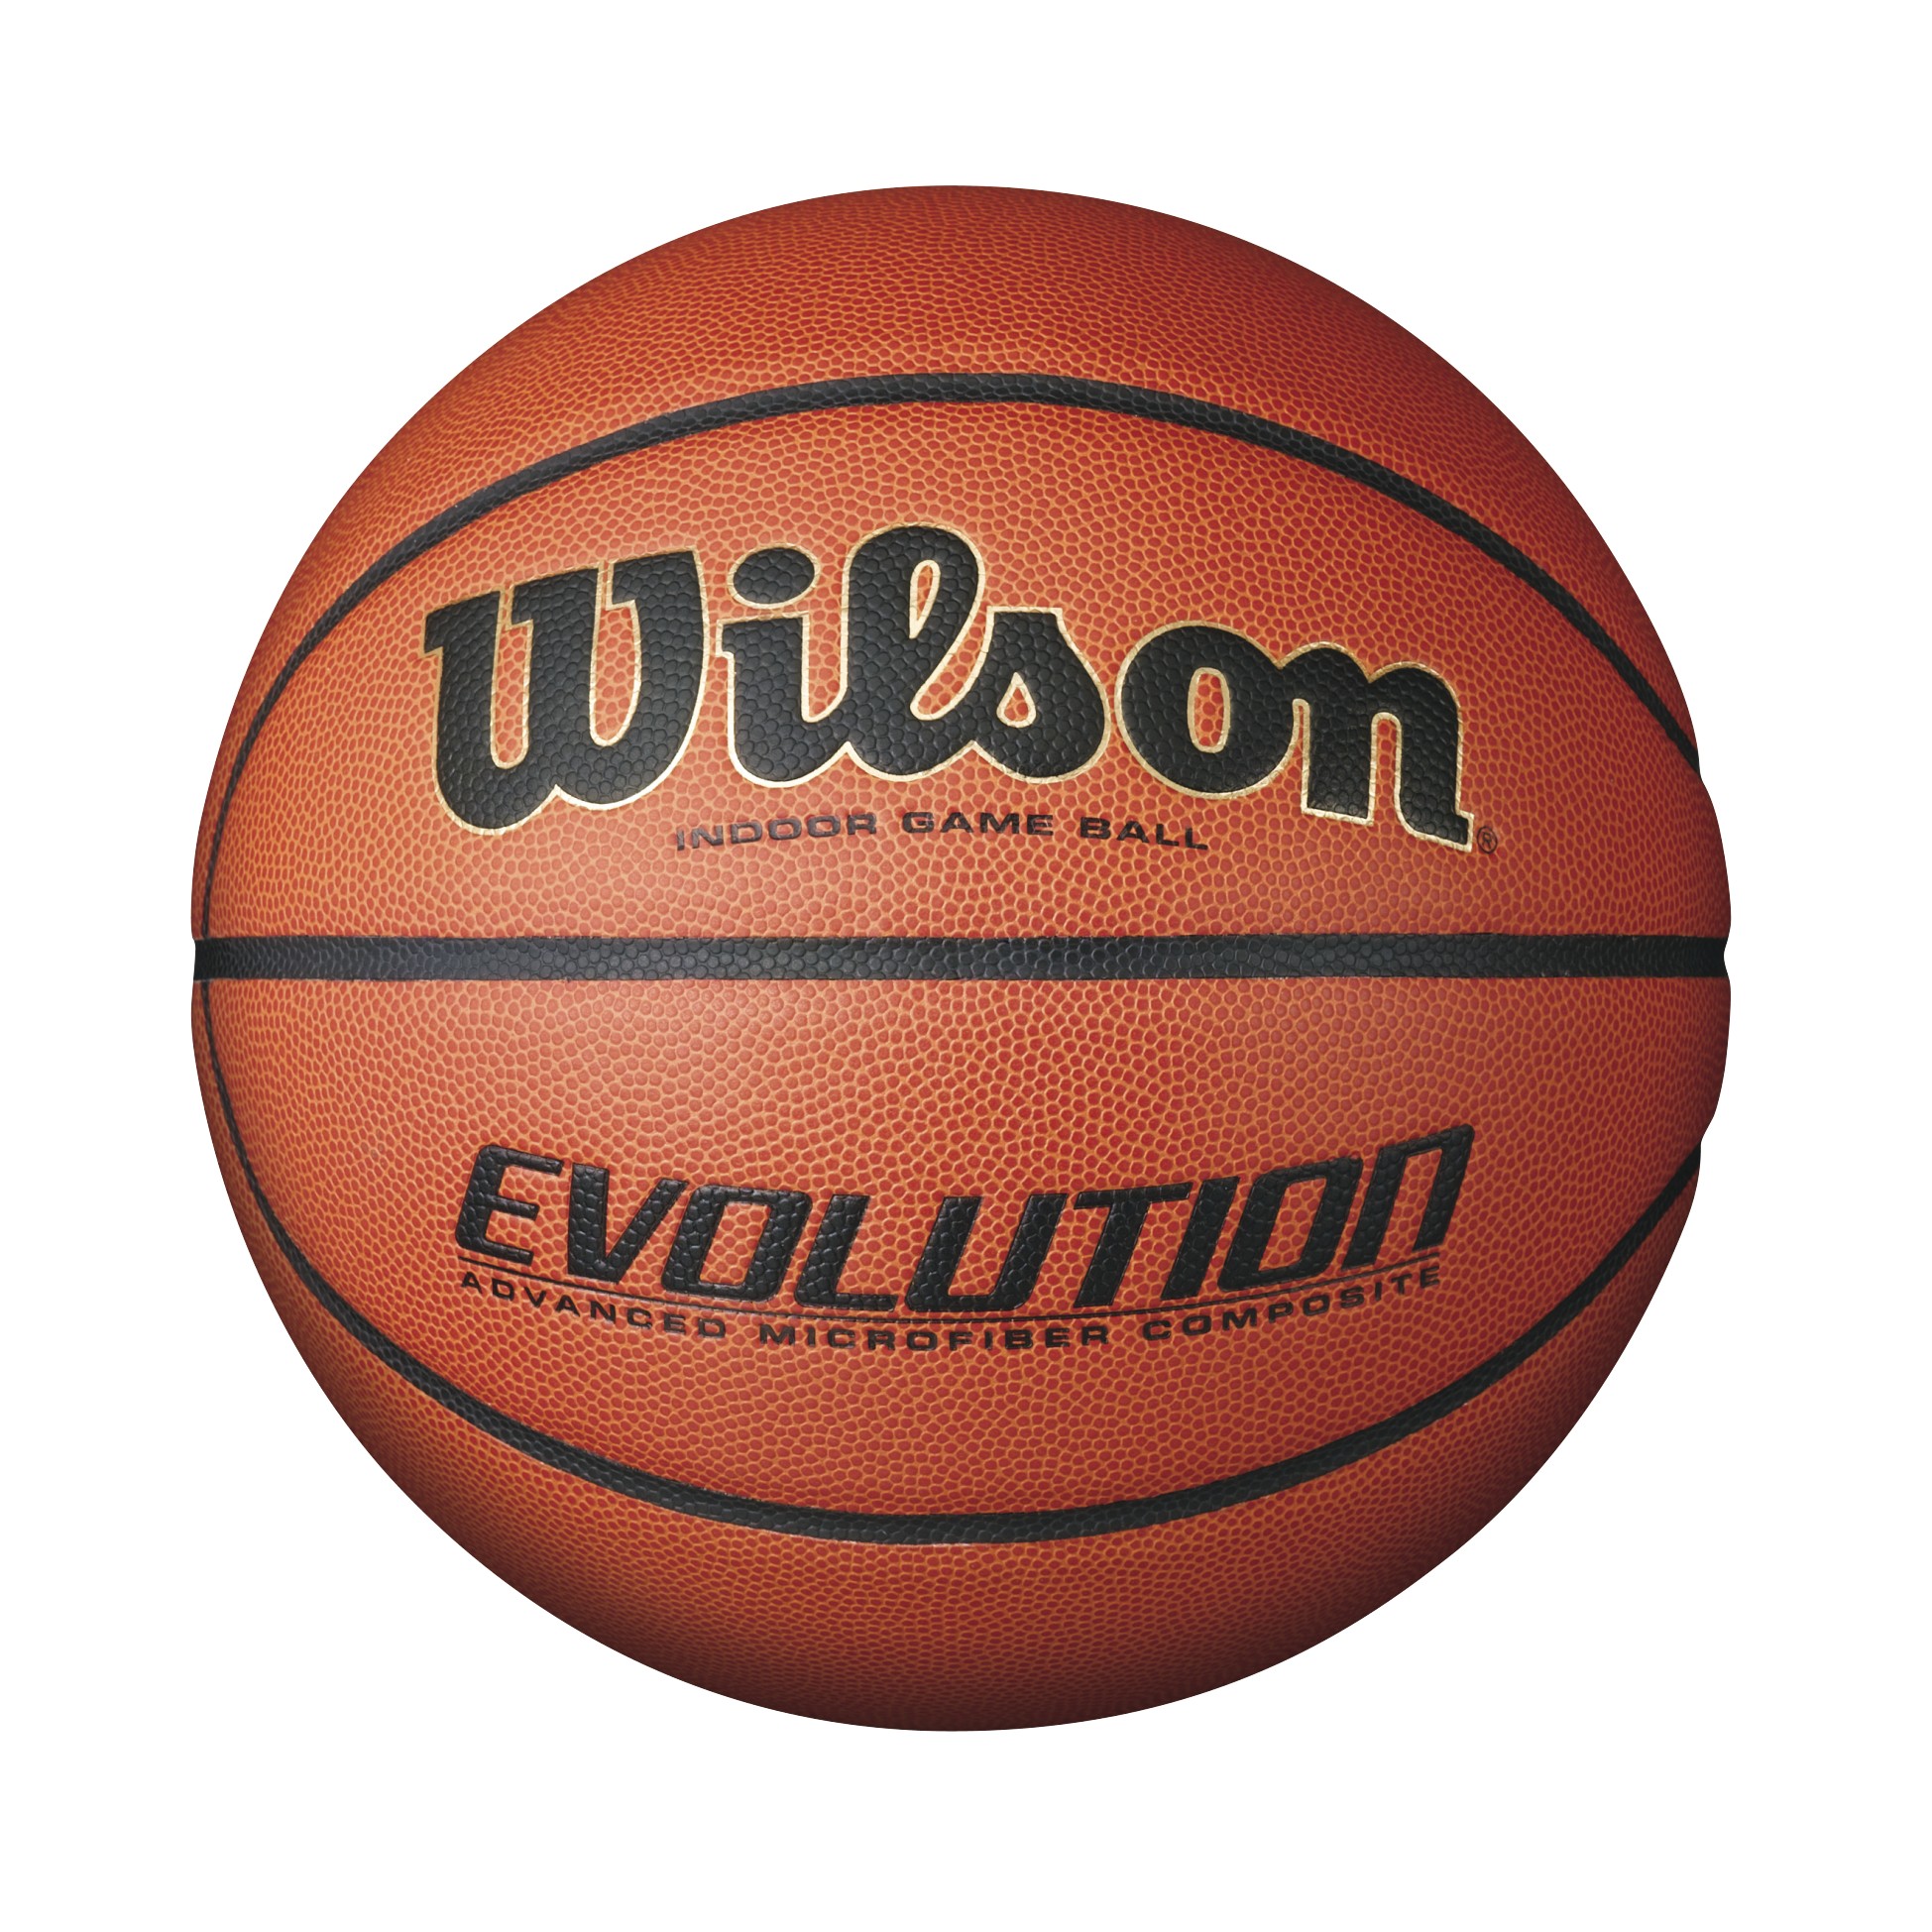 WILSON basketbola bumba EVOLUTION bumba